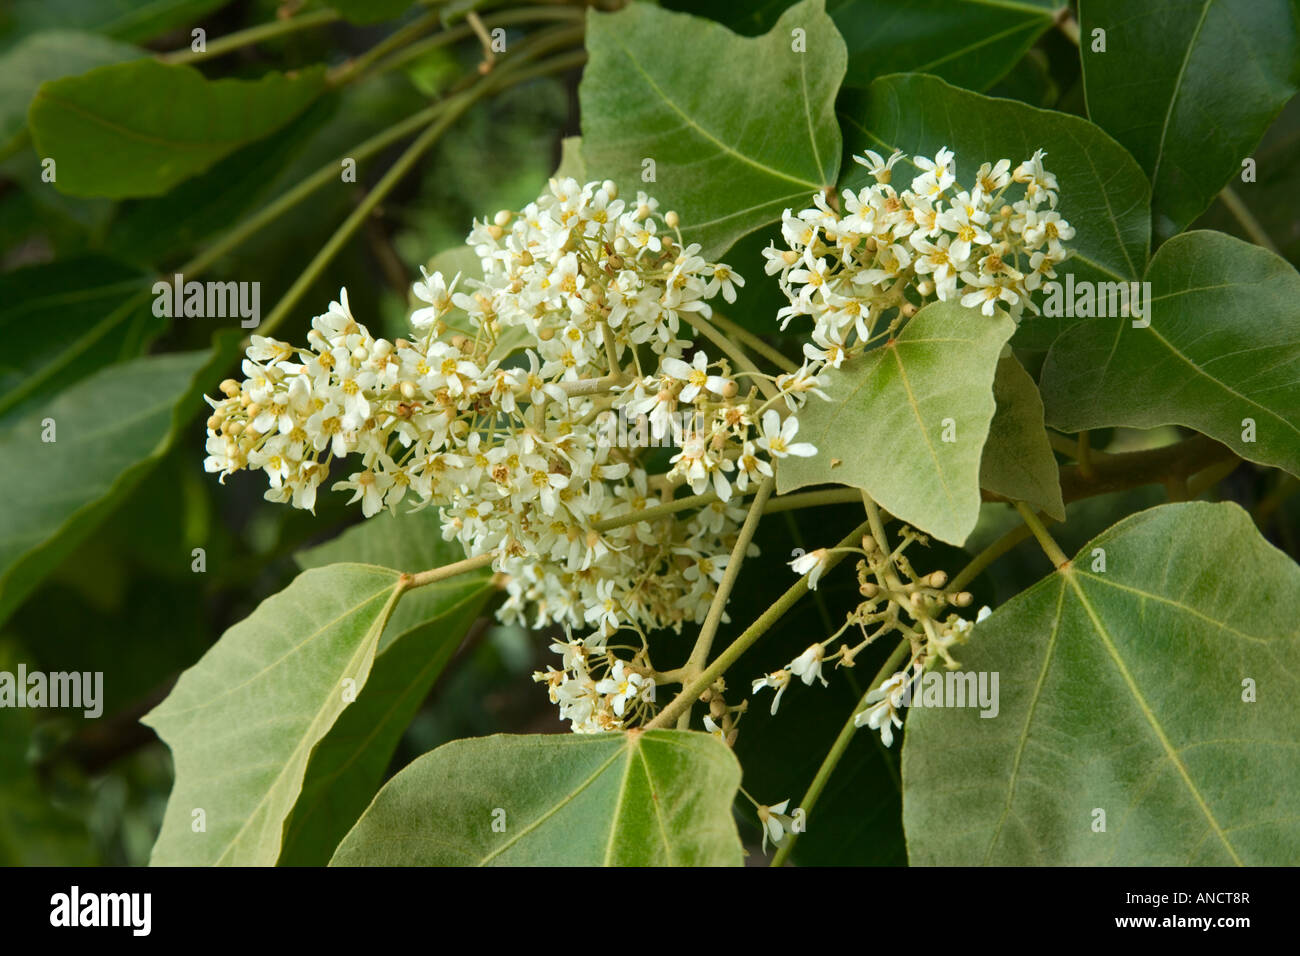 Flowers and foliage of the Kukui tree. Stock Photo